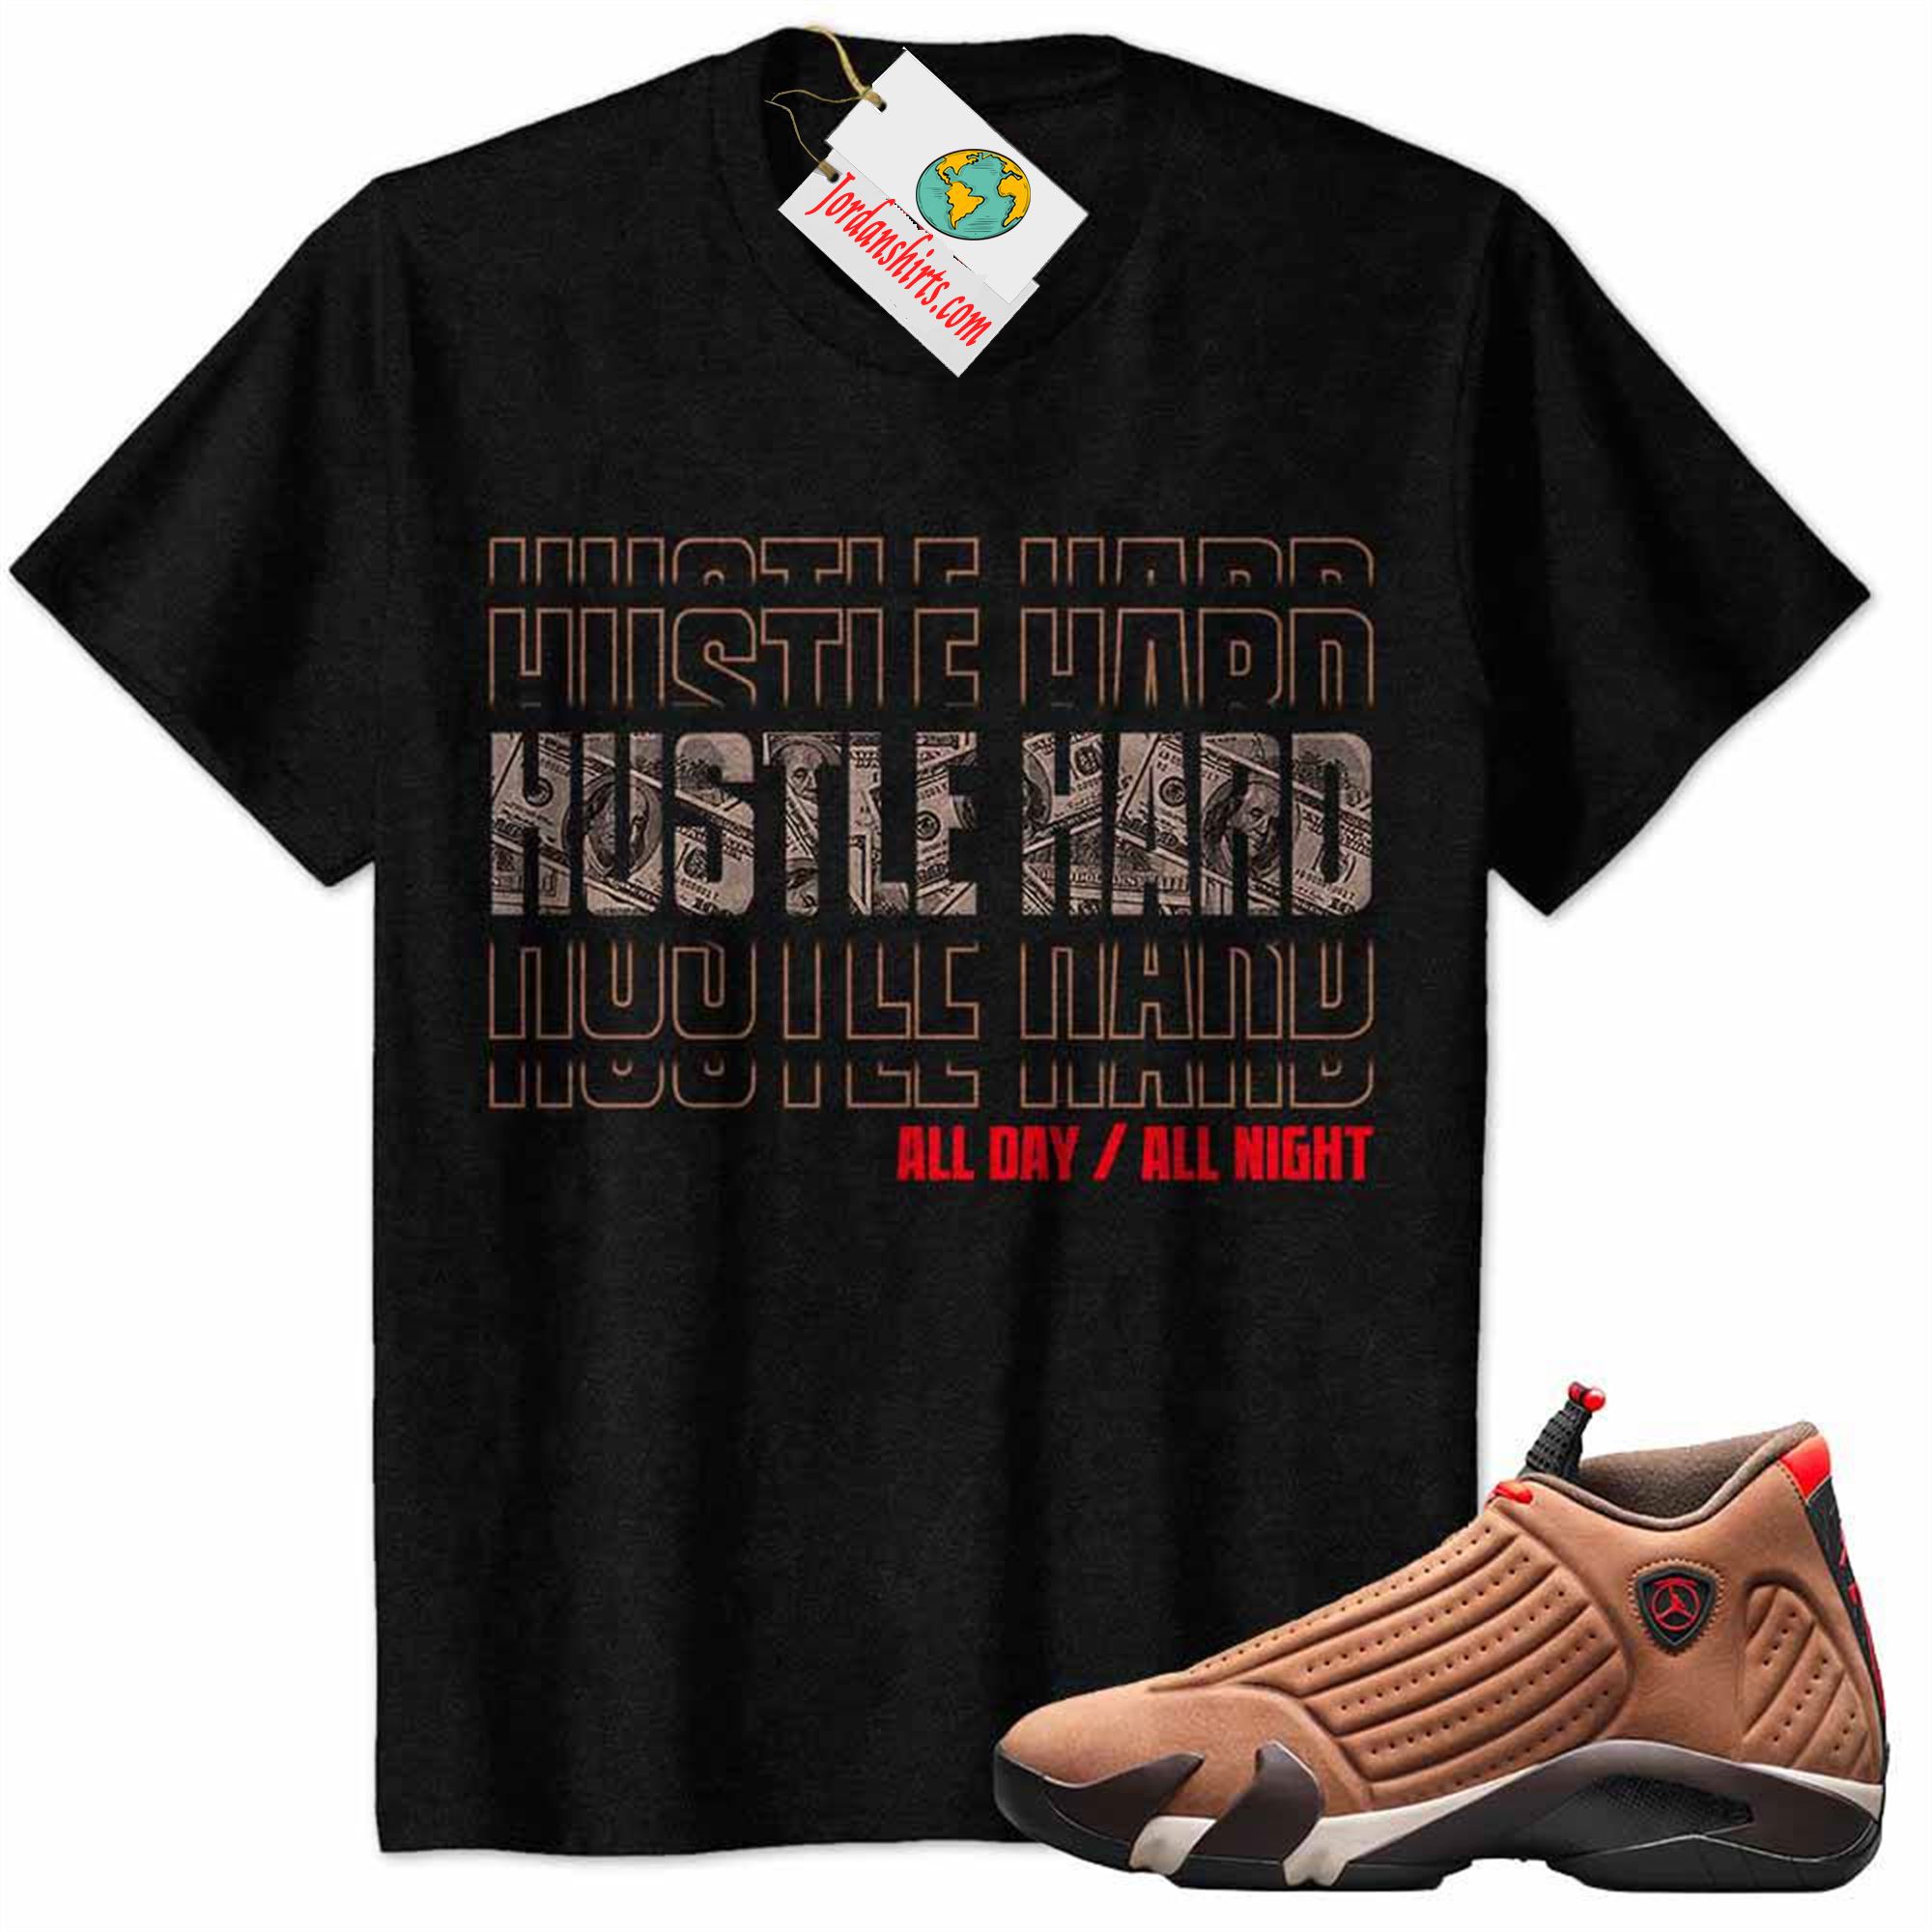 Jordan 14 Shirt, Hustle Hard All Day All Night Dollar Money Black Air Jordan 14 Winterized 14s Full Size Up To 5xl